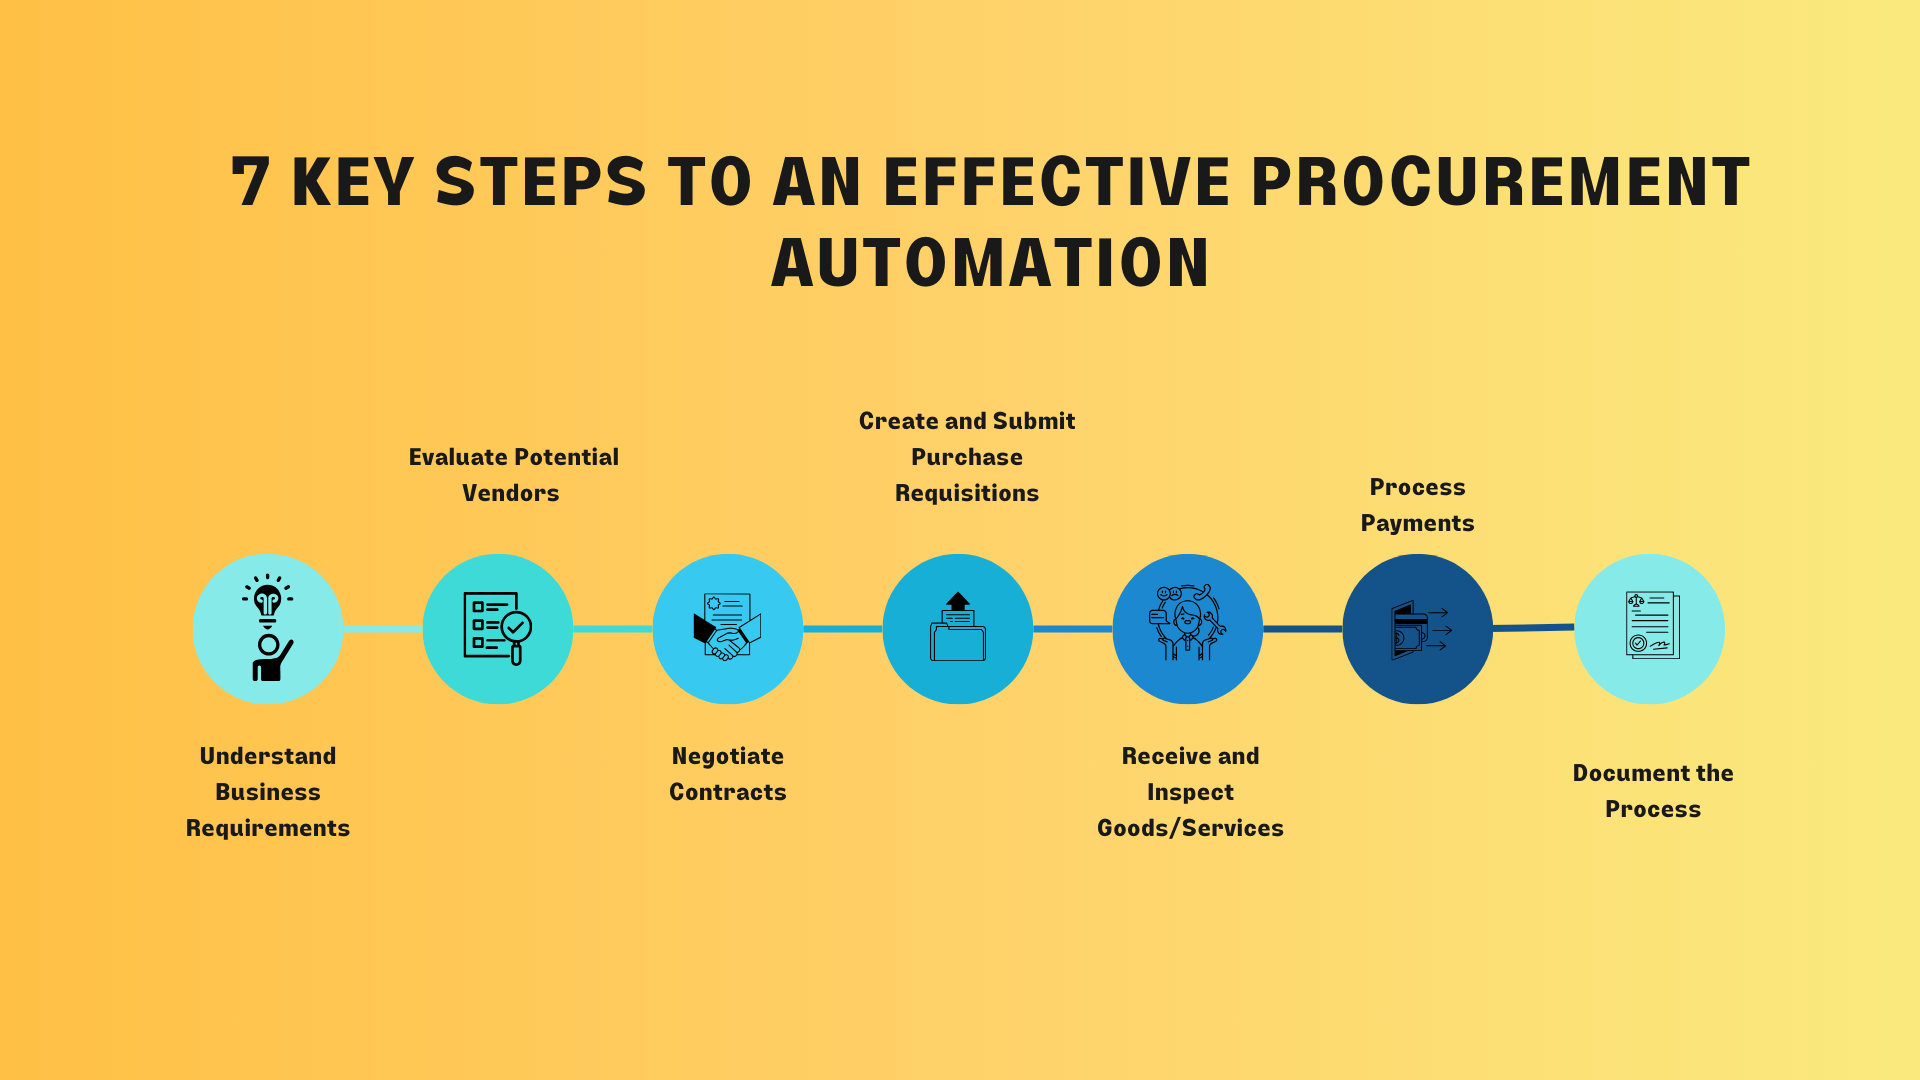 7 Key Steps to an Effective Procurement Automation